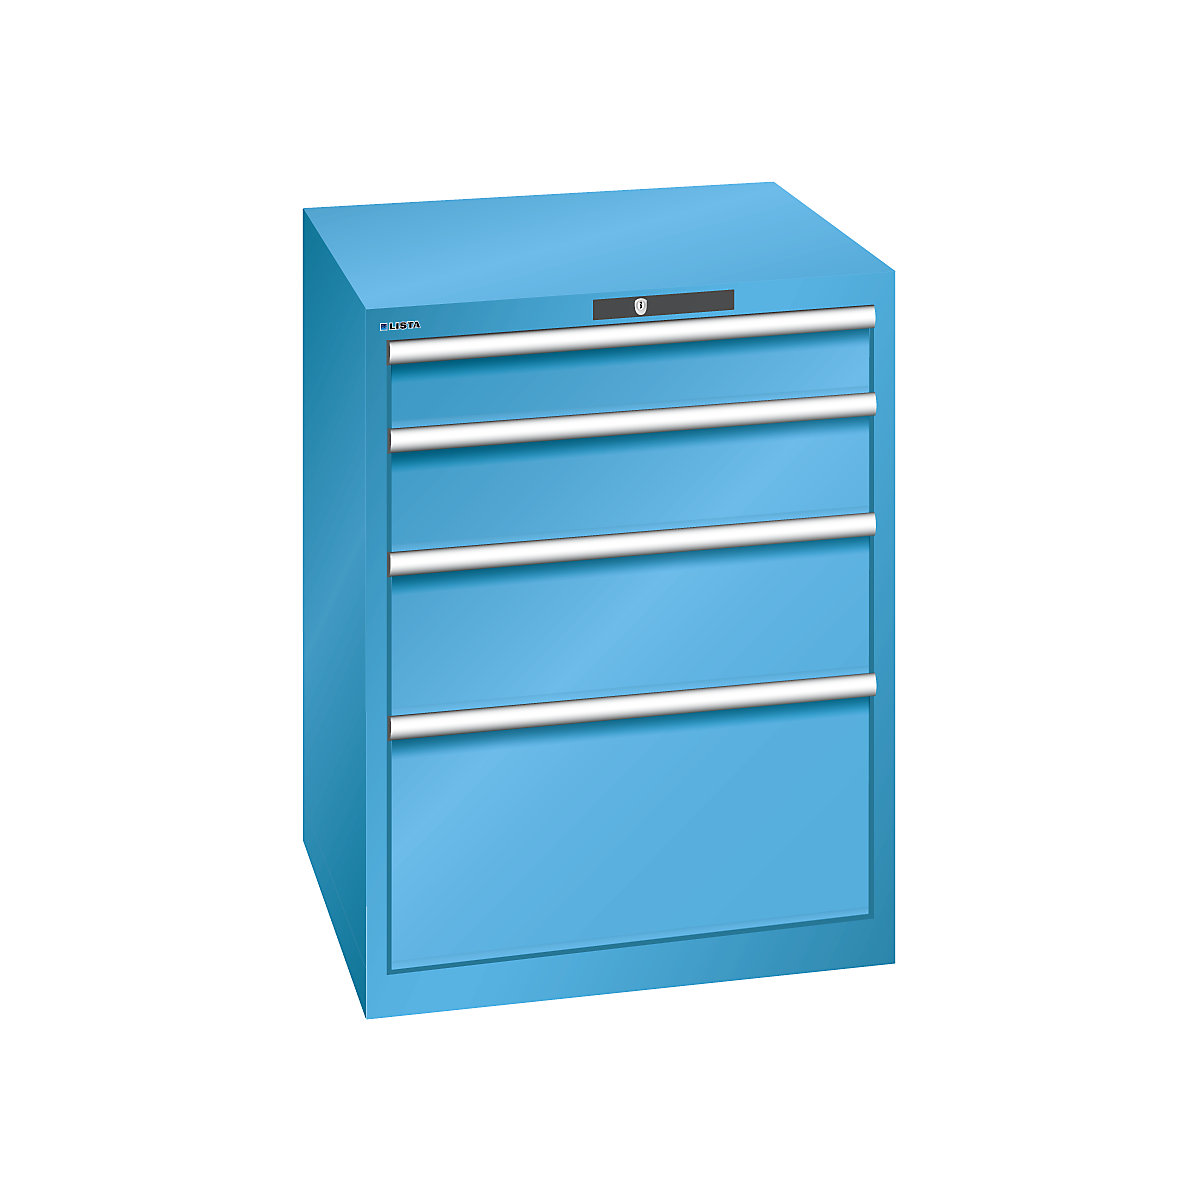 Drawer cupboard, 4 drawers – LISTA